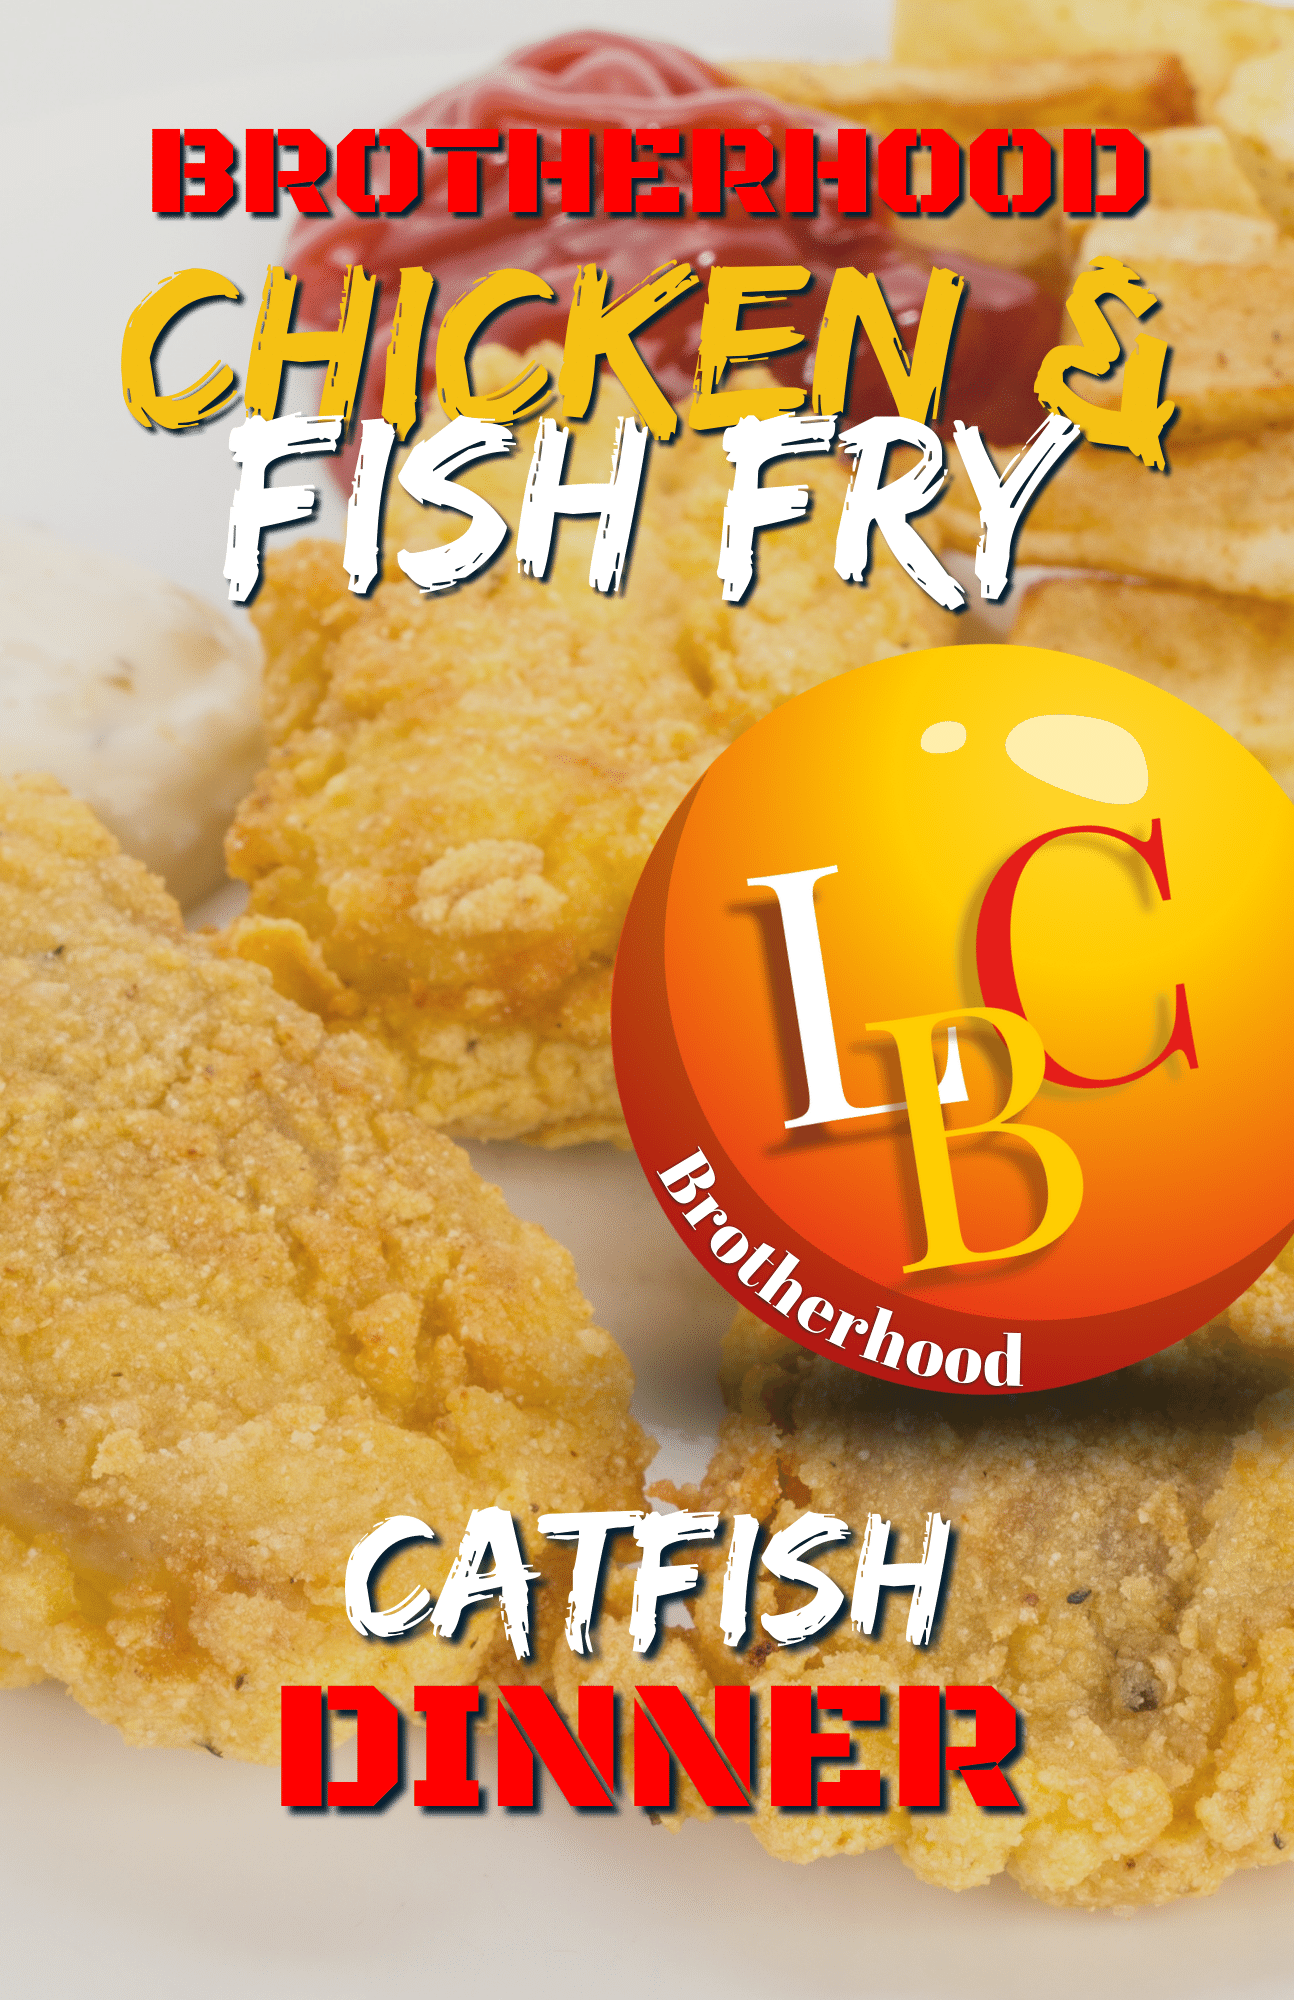 FishFry_Catfish_Product Image.png